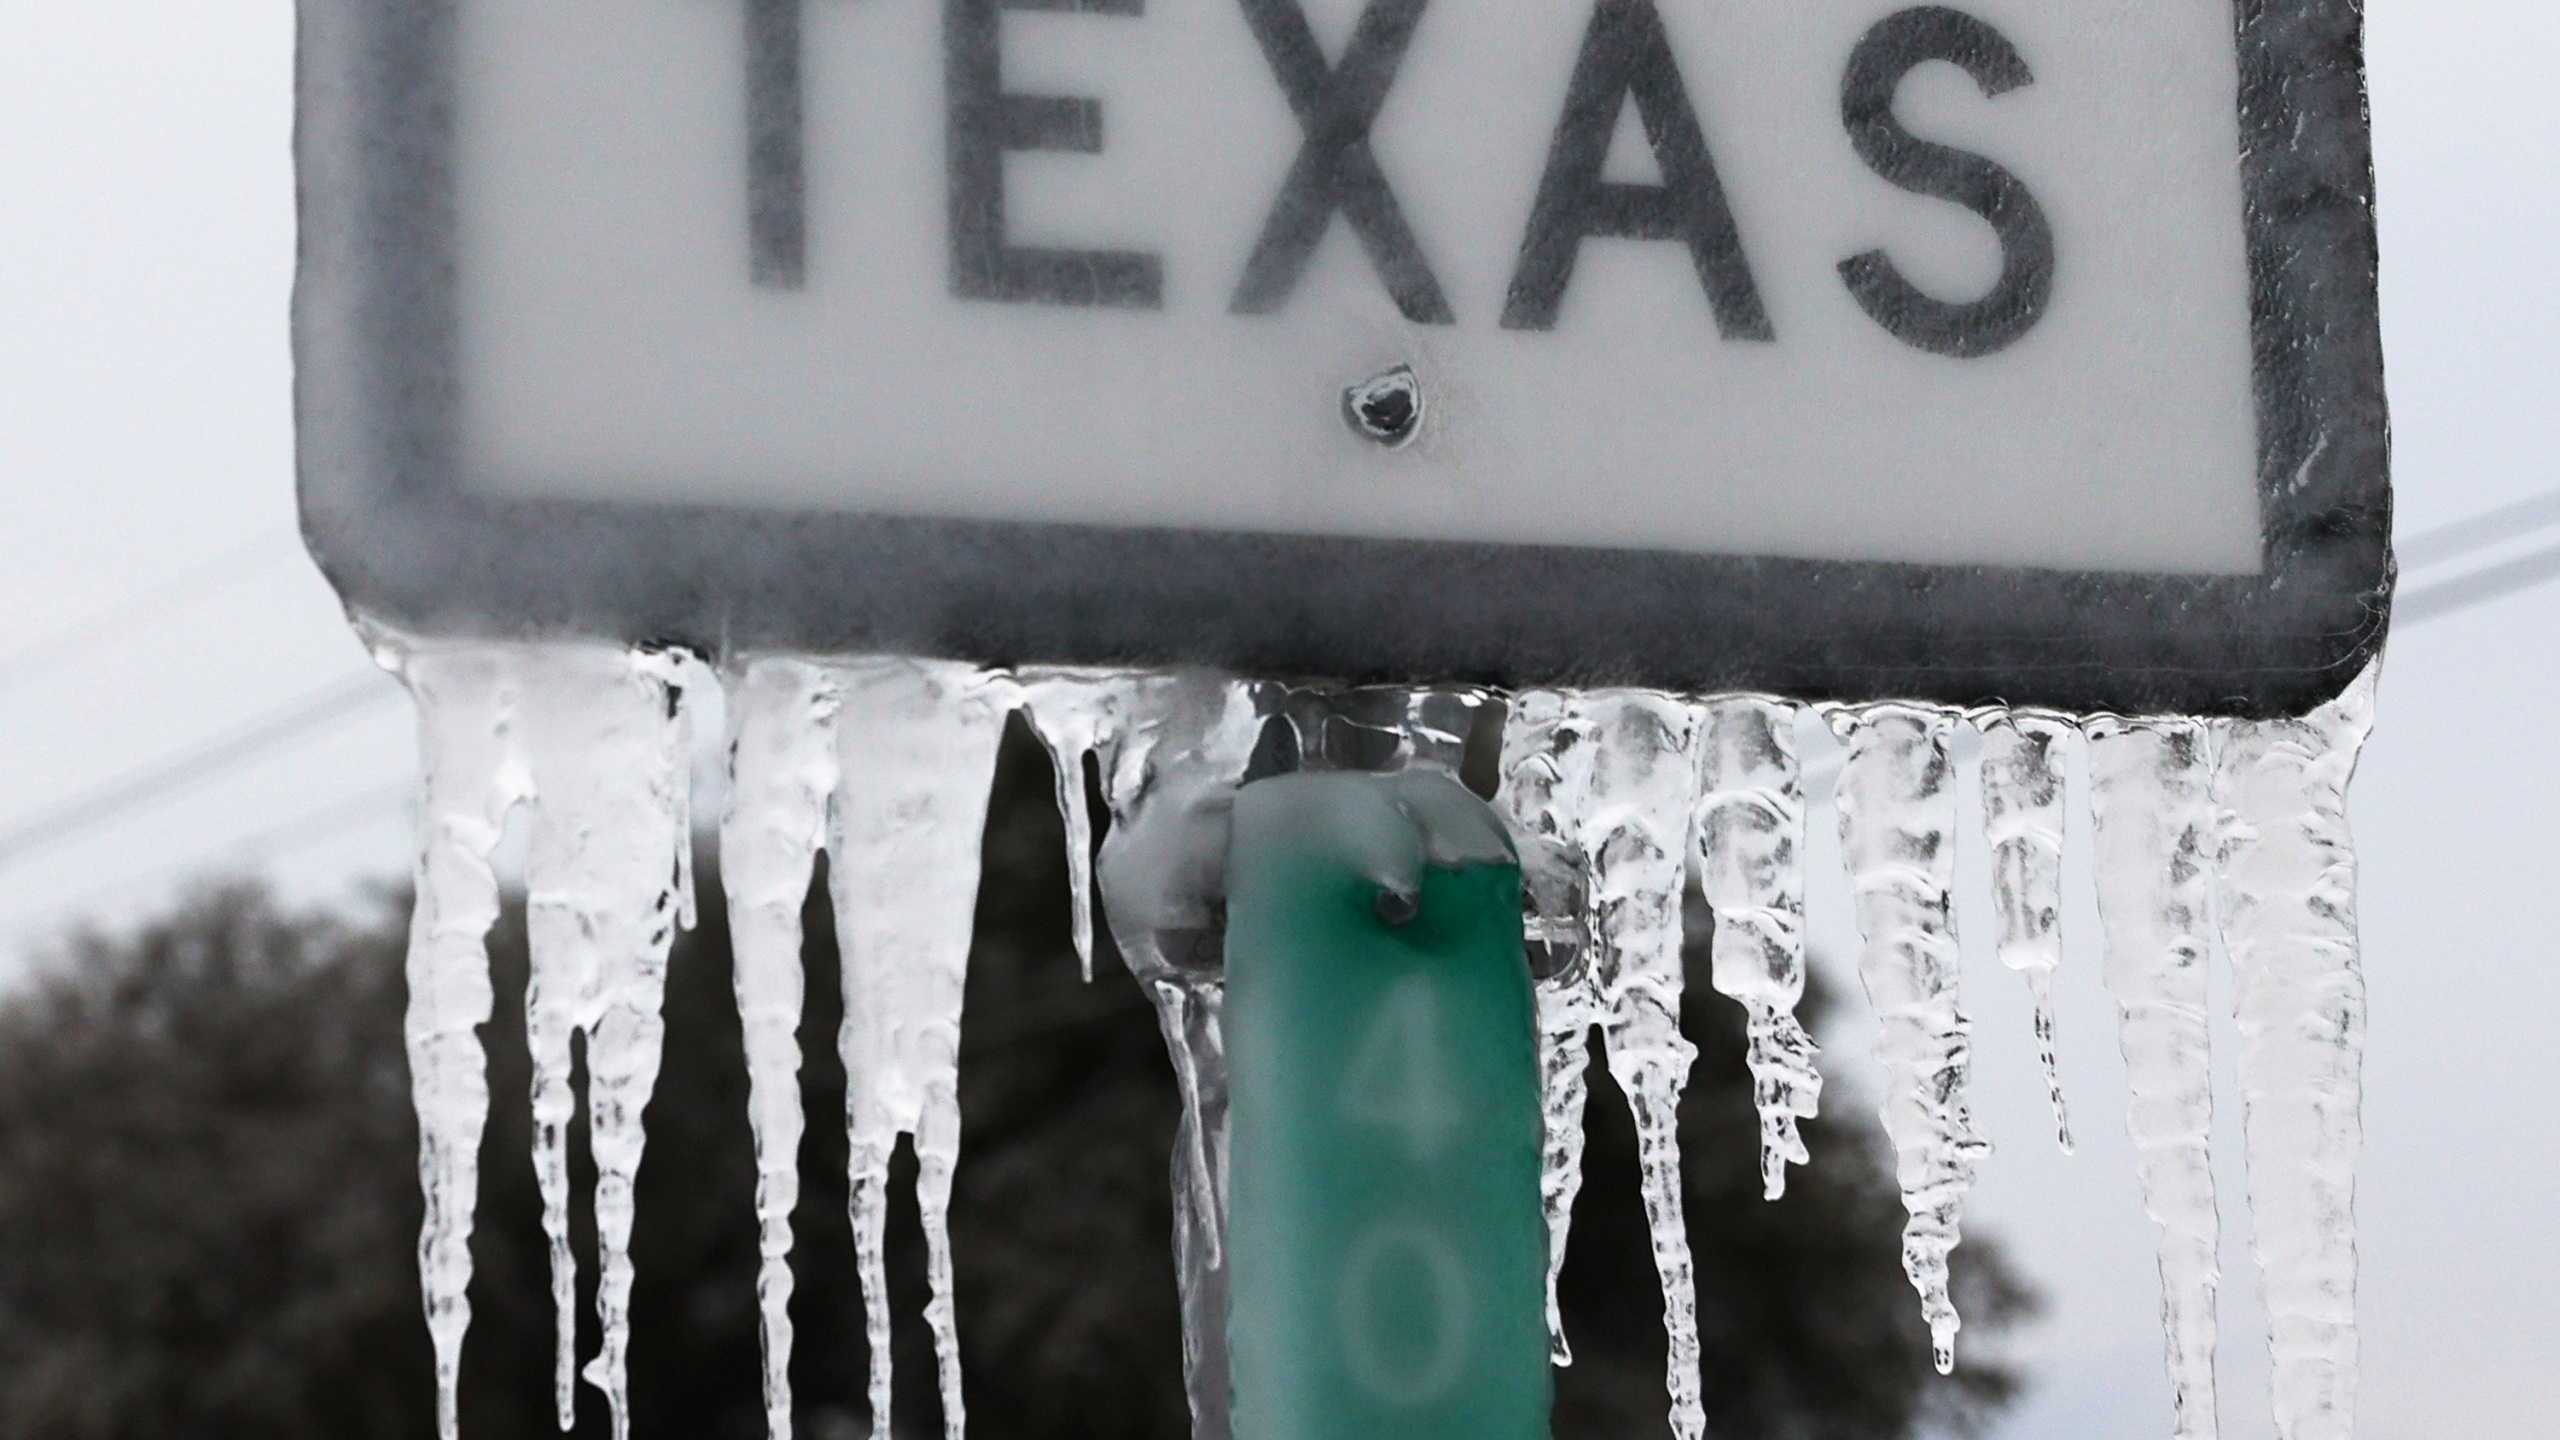 TEXAS Winter Death Increasing, Man body found Frozen in ICE